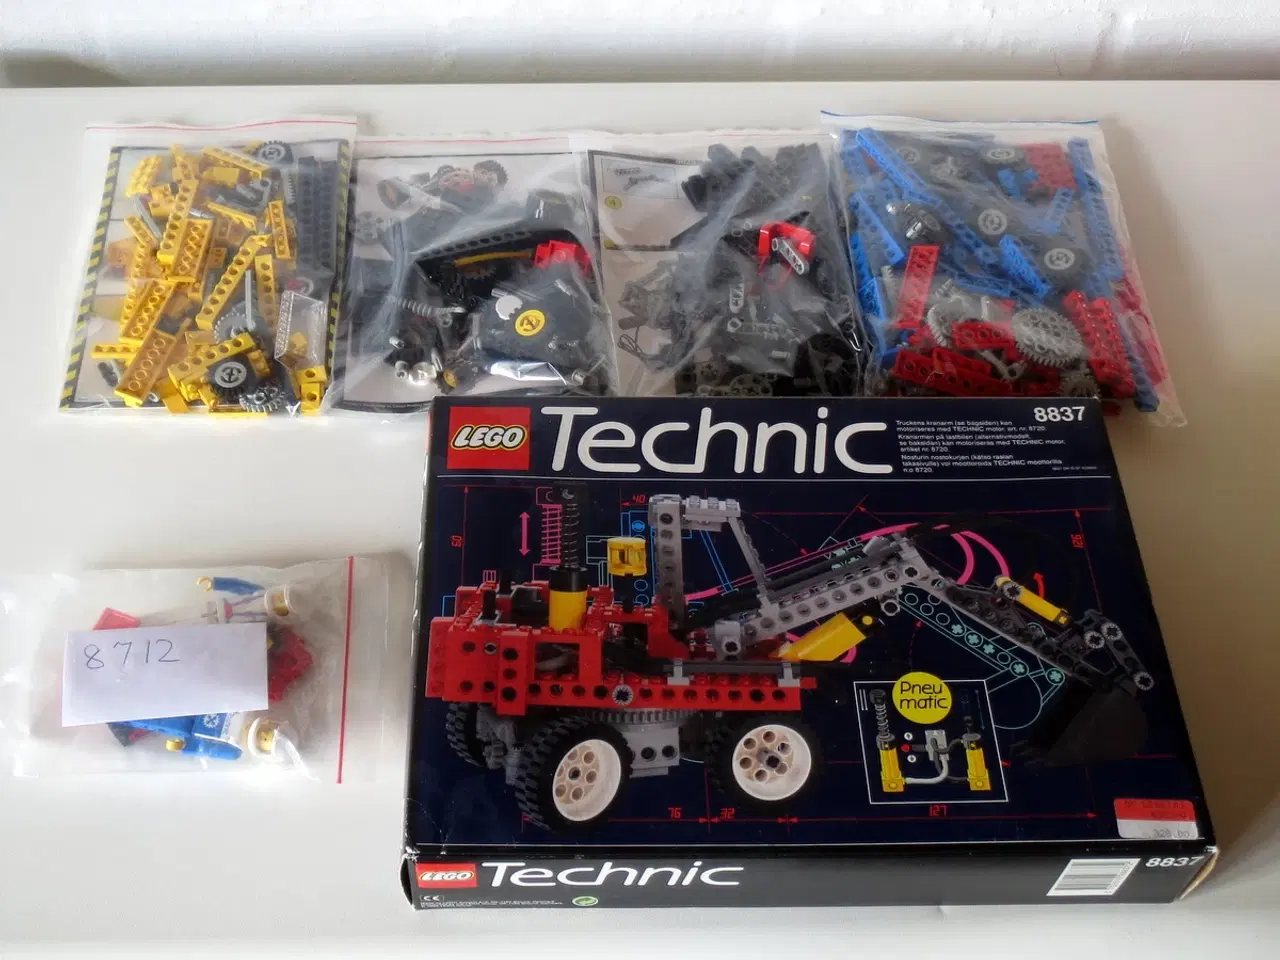 Billede 1 - Lego Technic, 8020, 3035, 8825, 8832, 8837, 8712